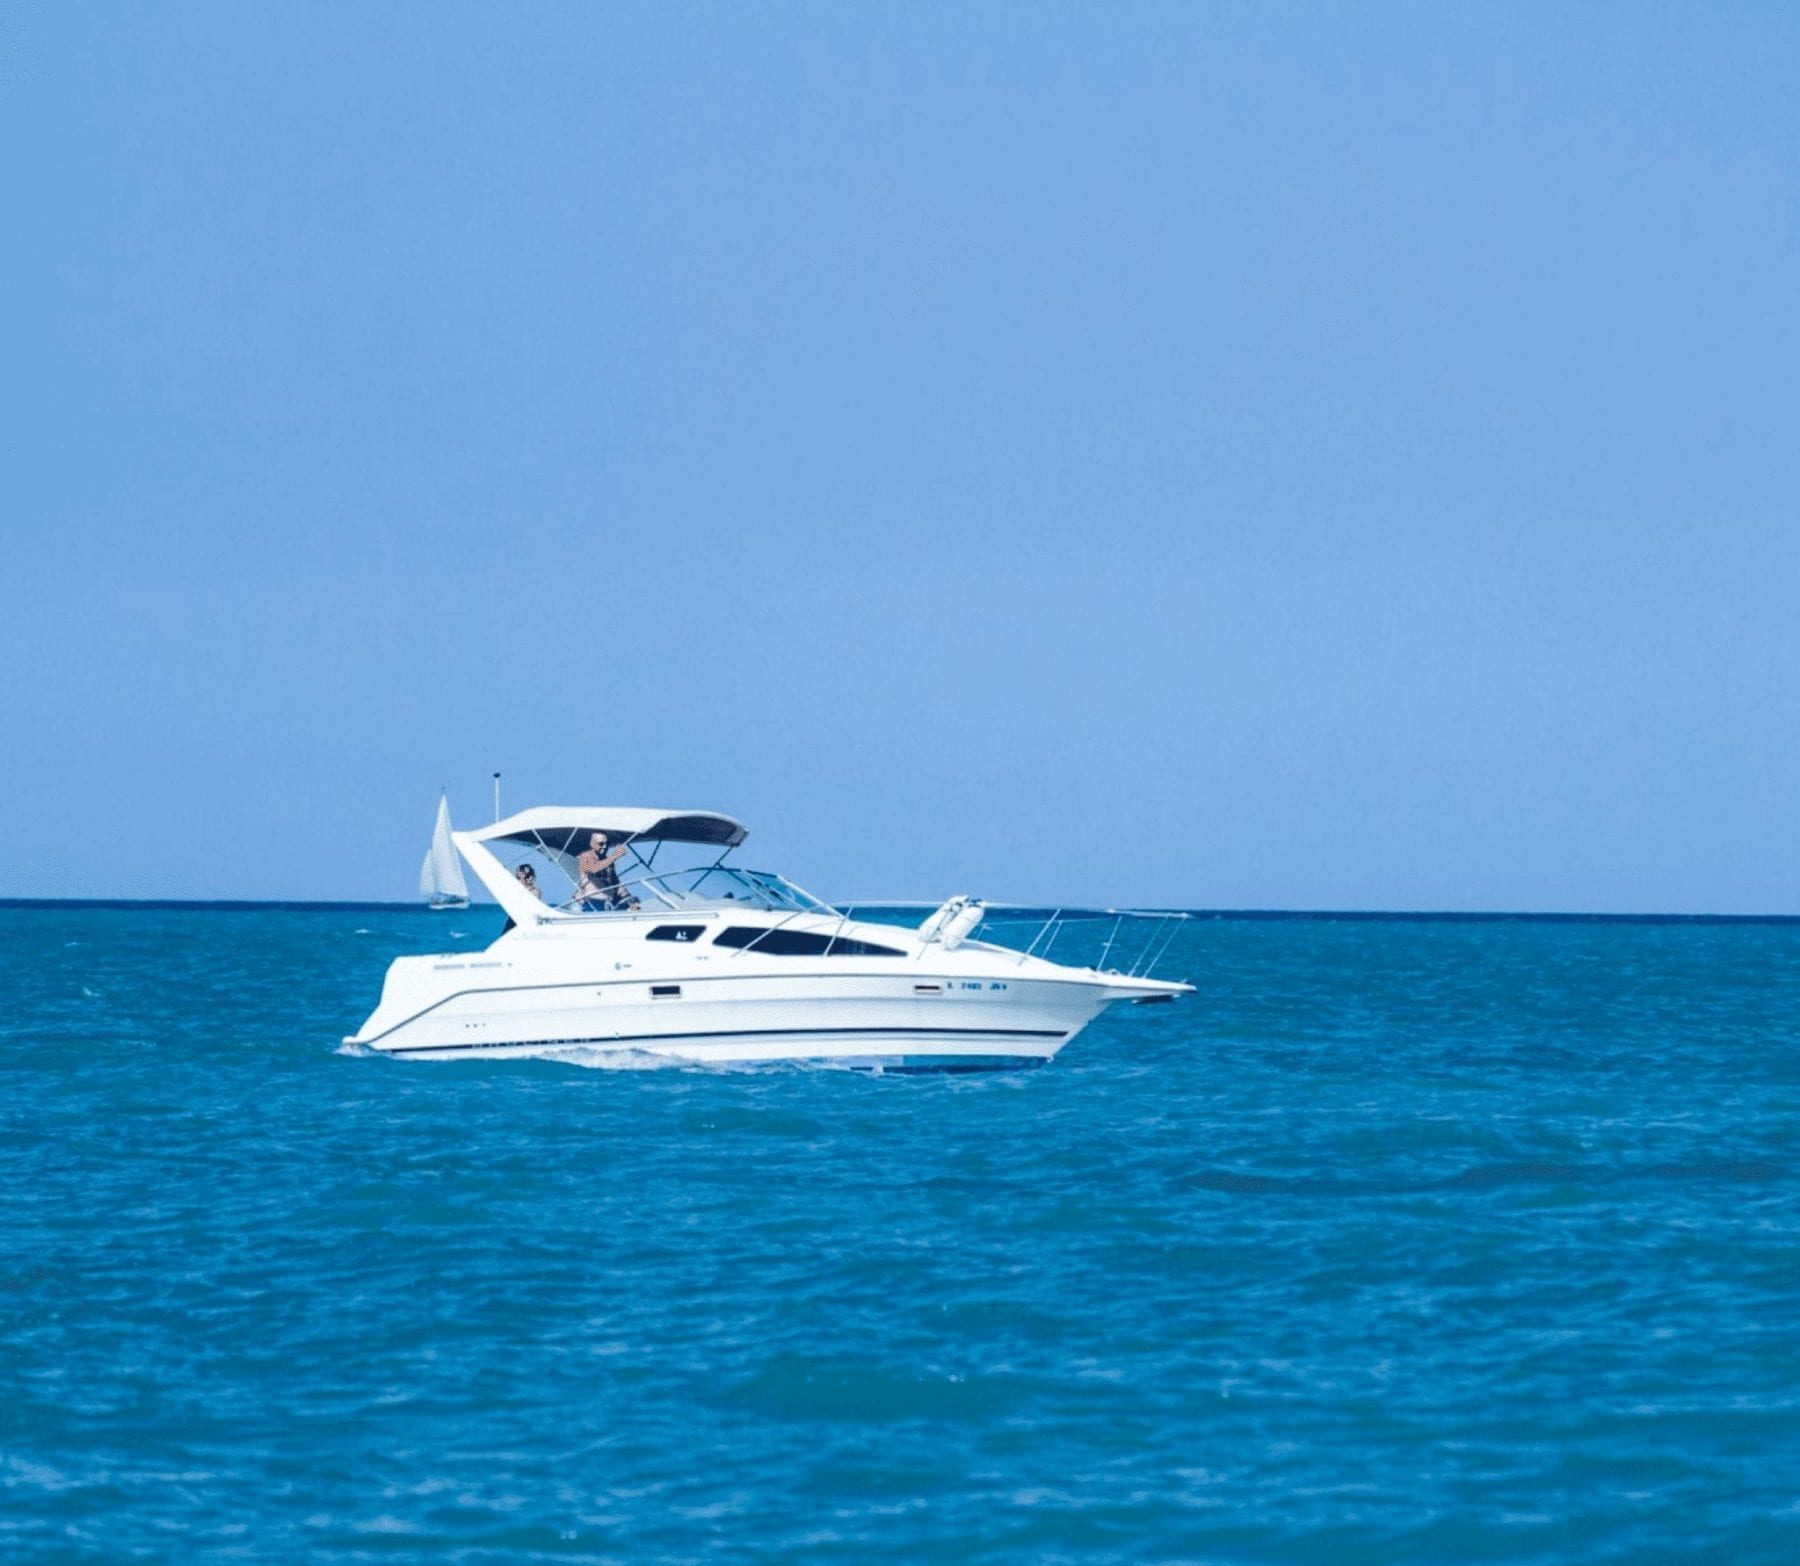 Gaeta Beach Vacation boat rental